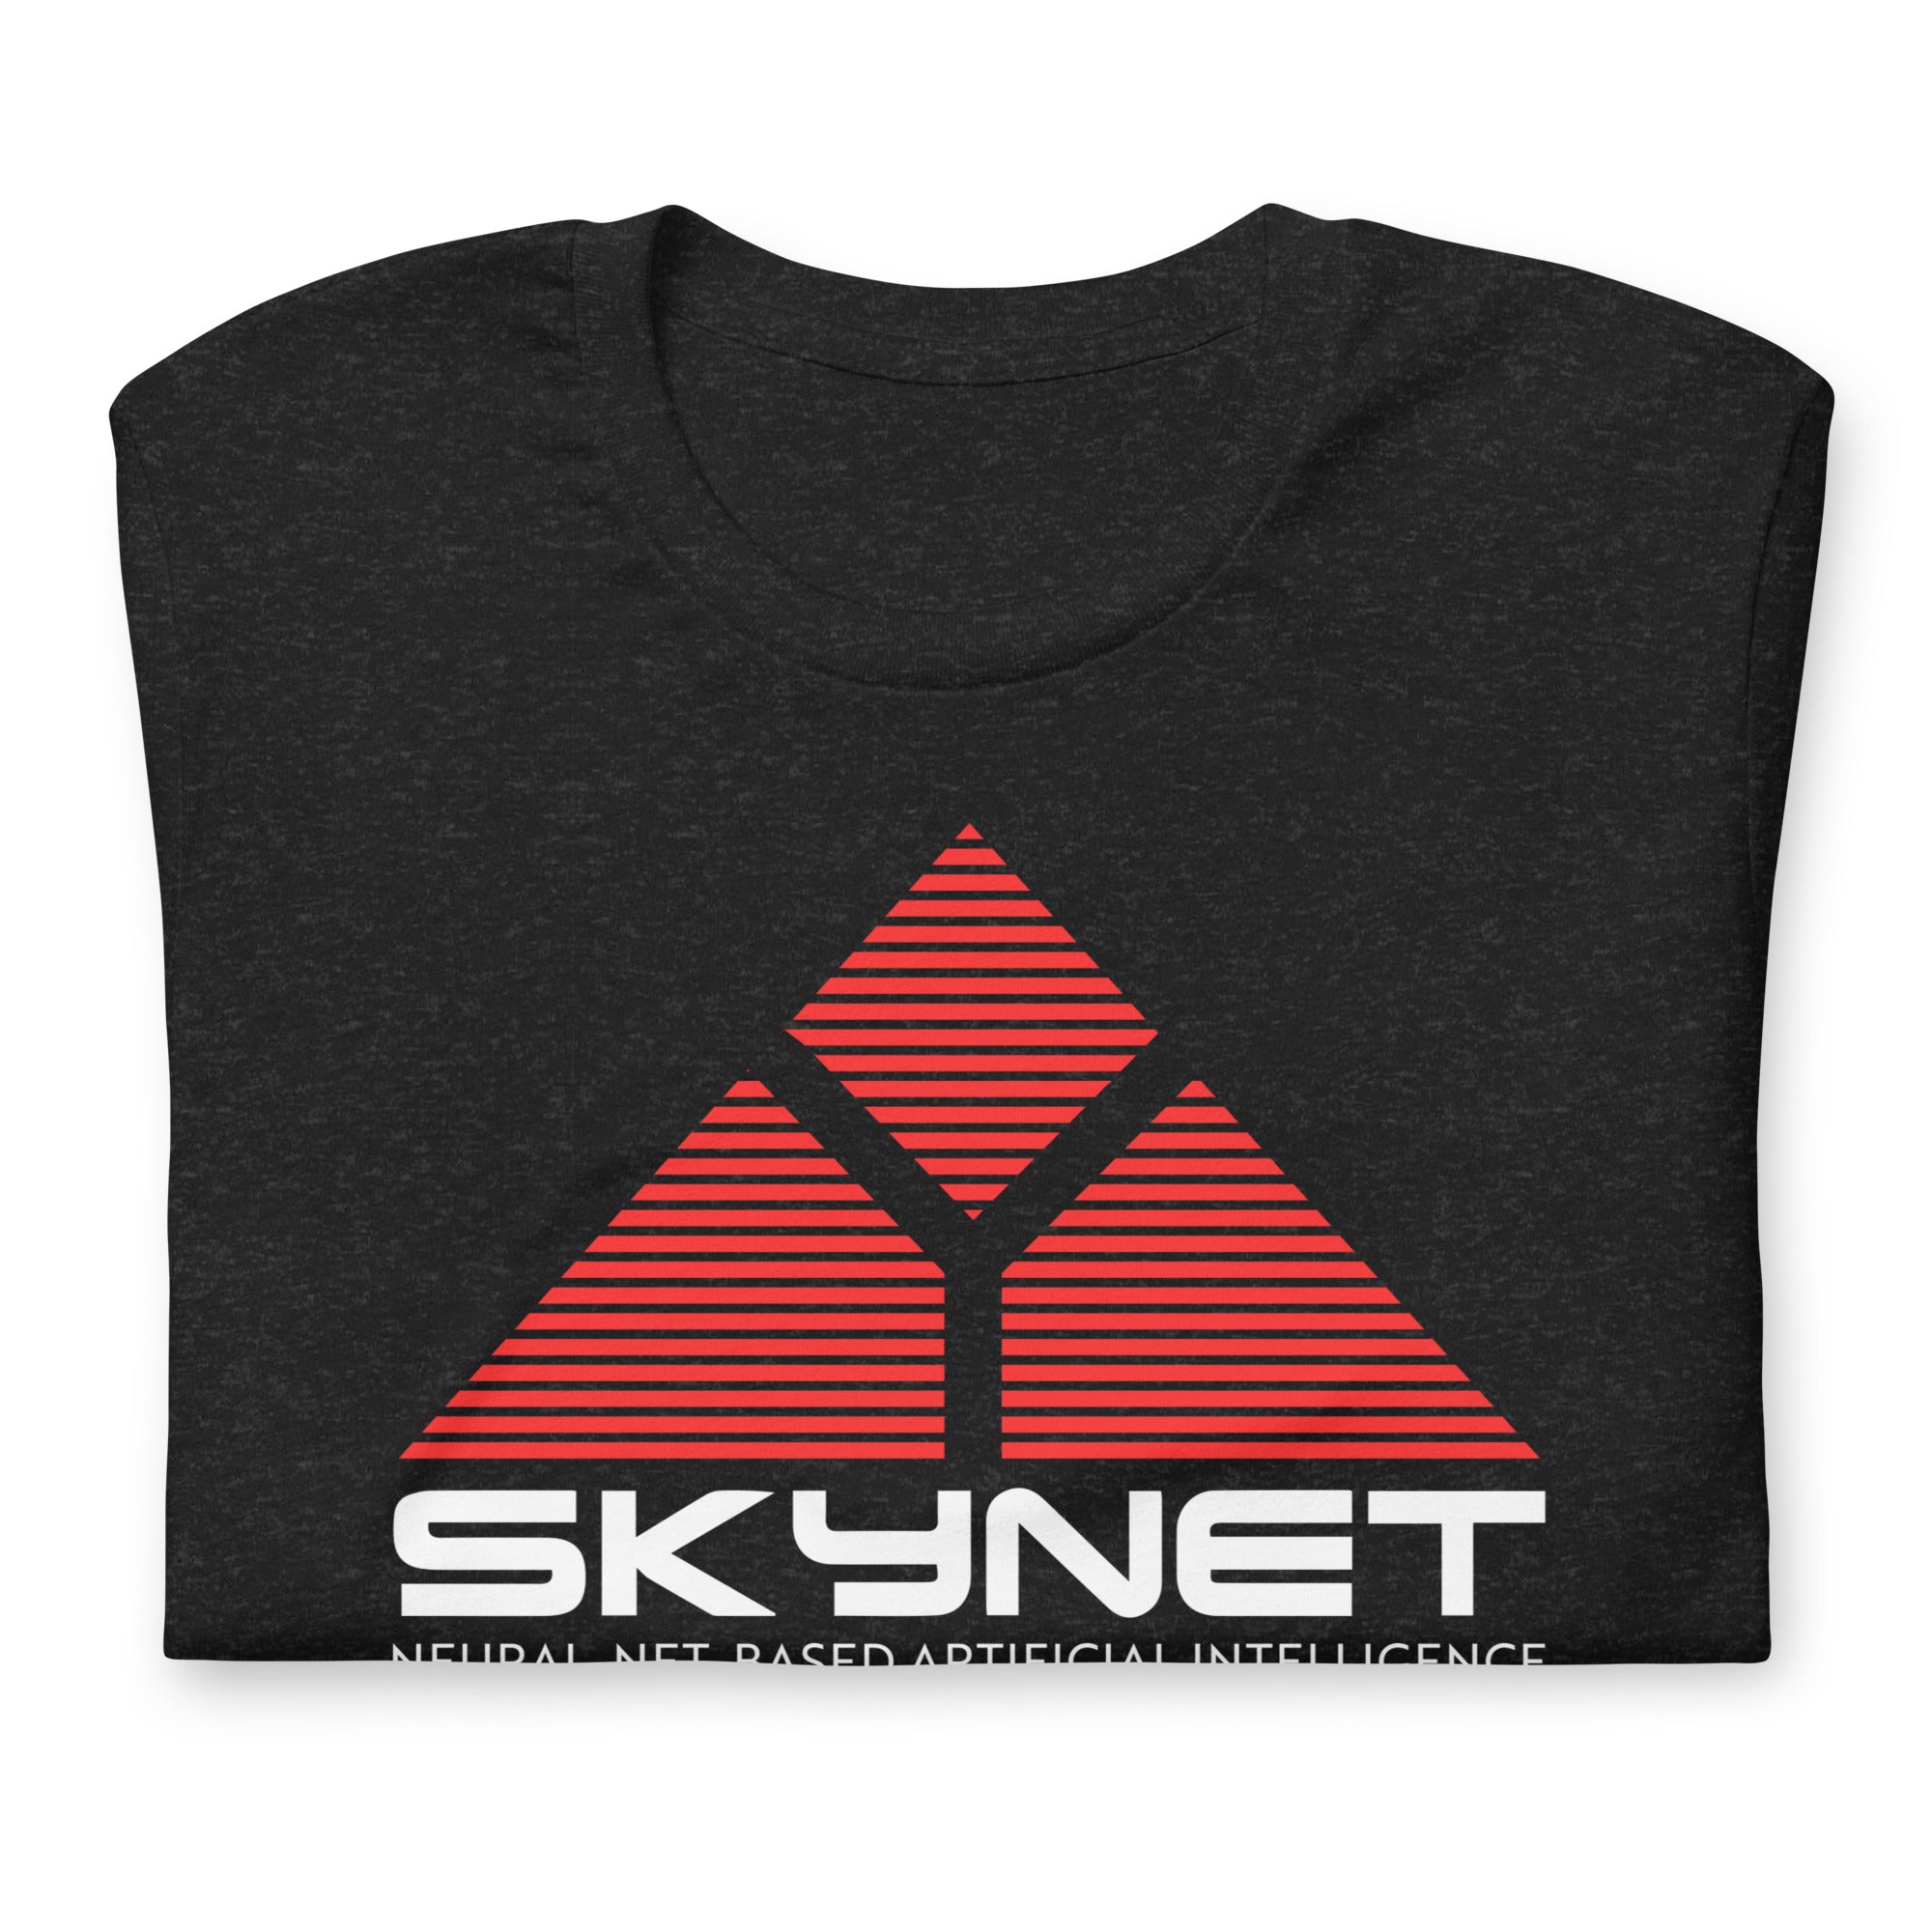 SKYNET Cyberdyne T-Shirt